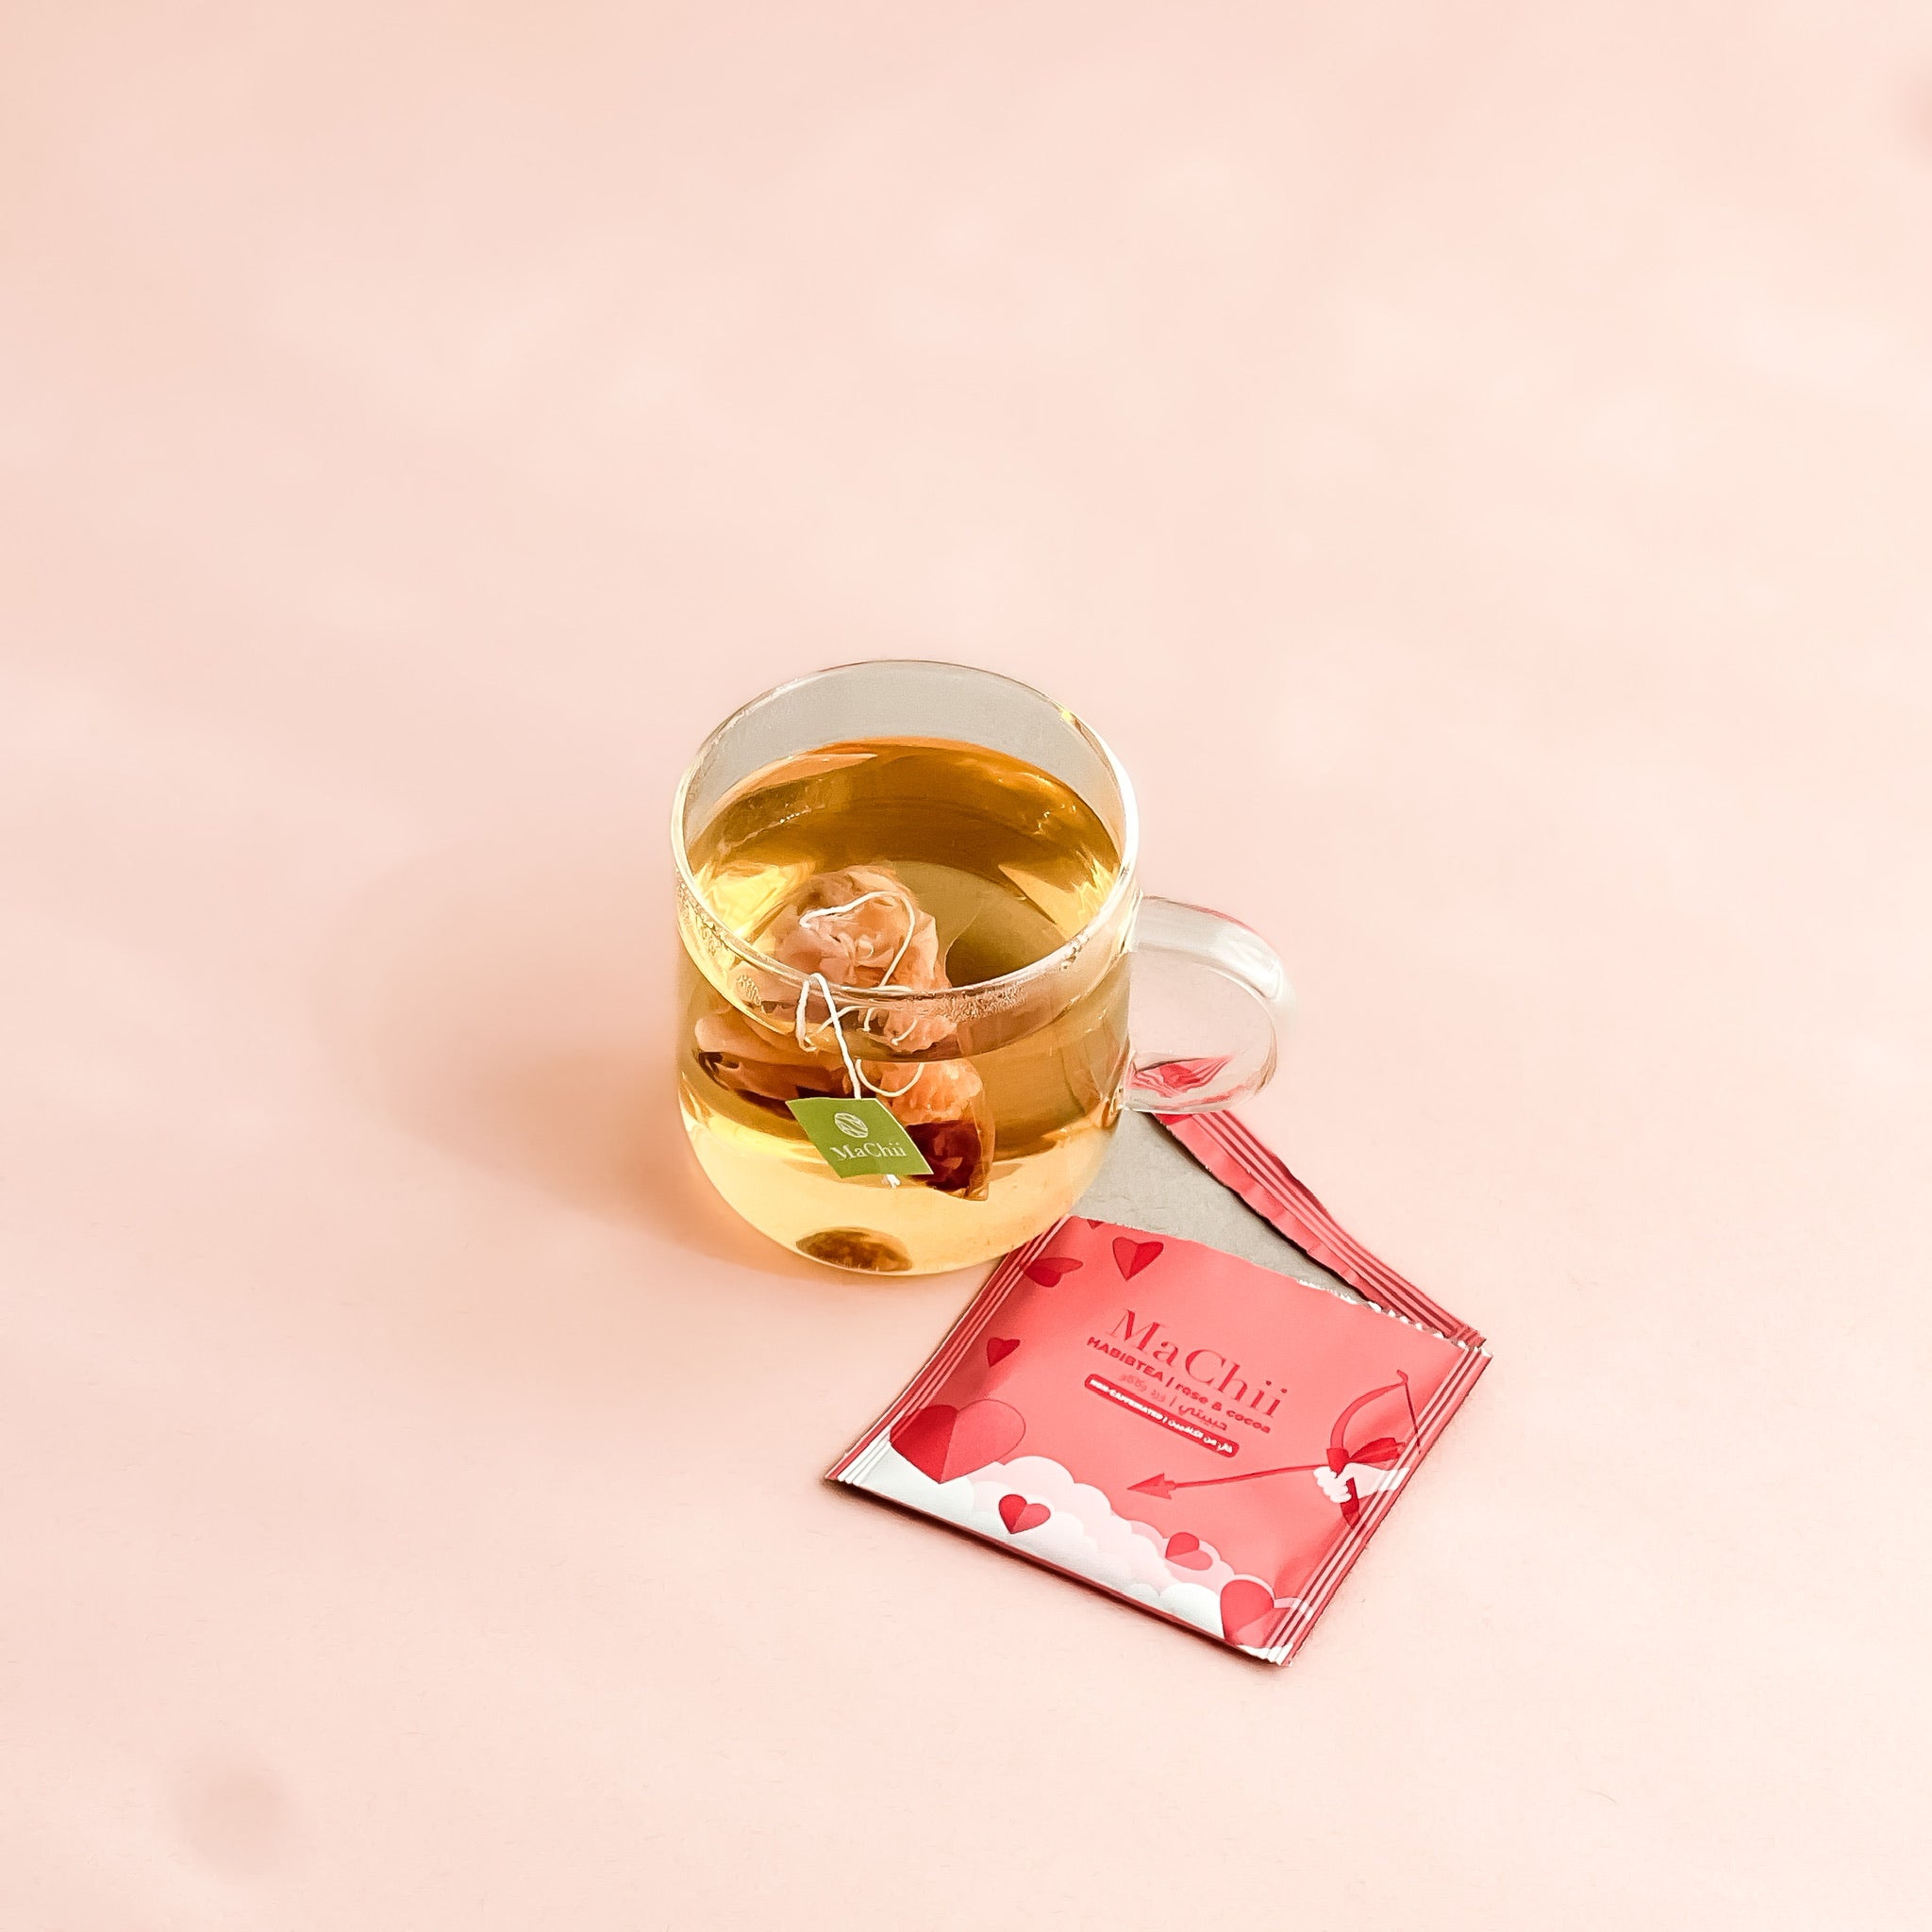 organic silk tea bag brewing in a glass mug. the tea is made of rose and cocoa tea.